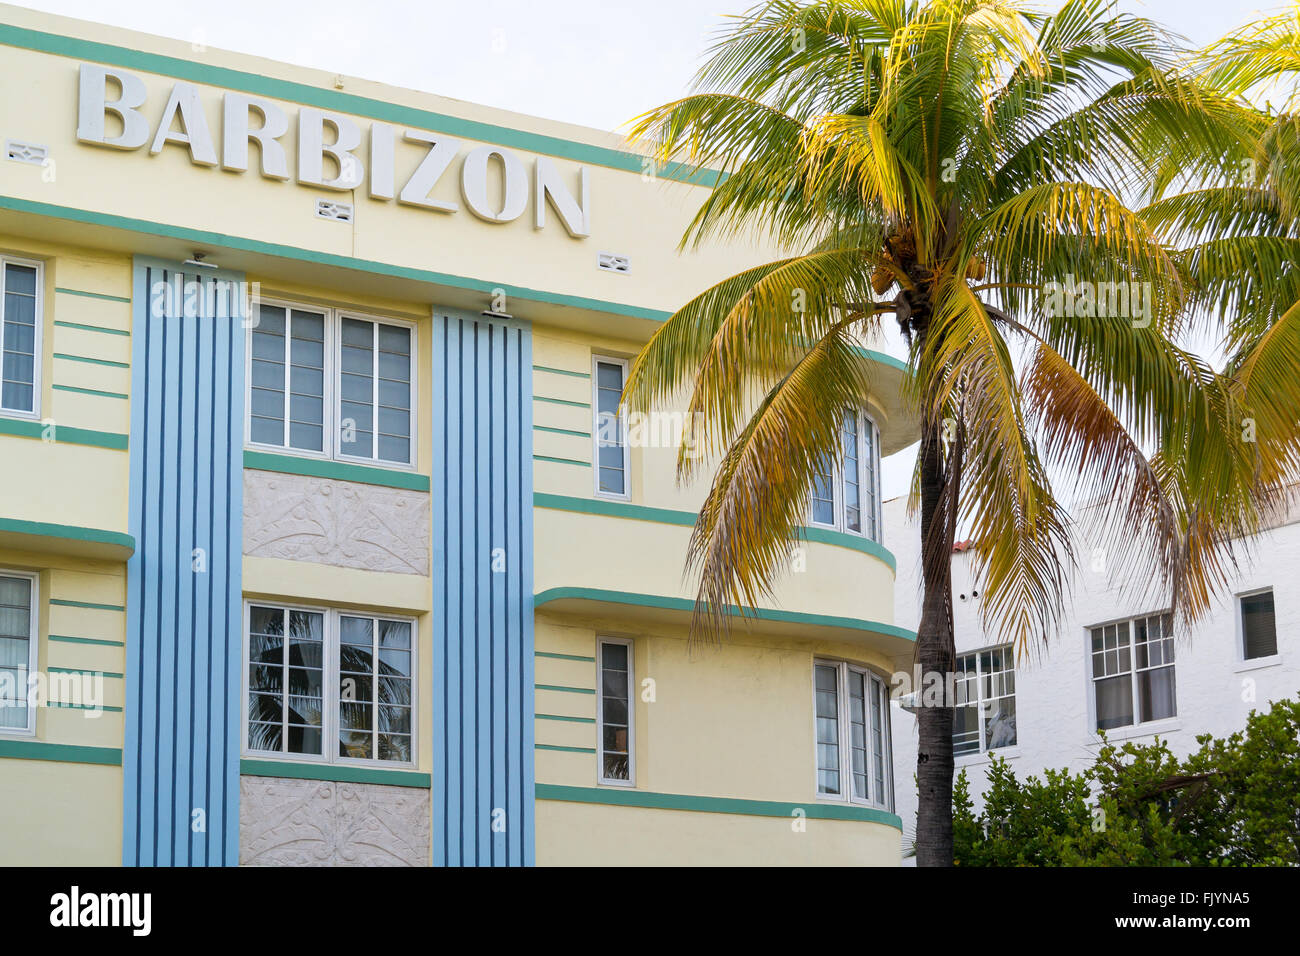 Top Fassade des Art-deco-Haus Barbizon am Ocean Drive in South Beach District von Miami Beach, Florida, USA Stockfoto